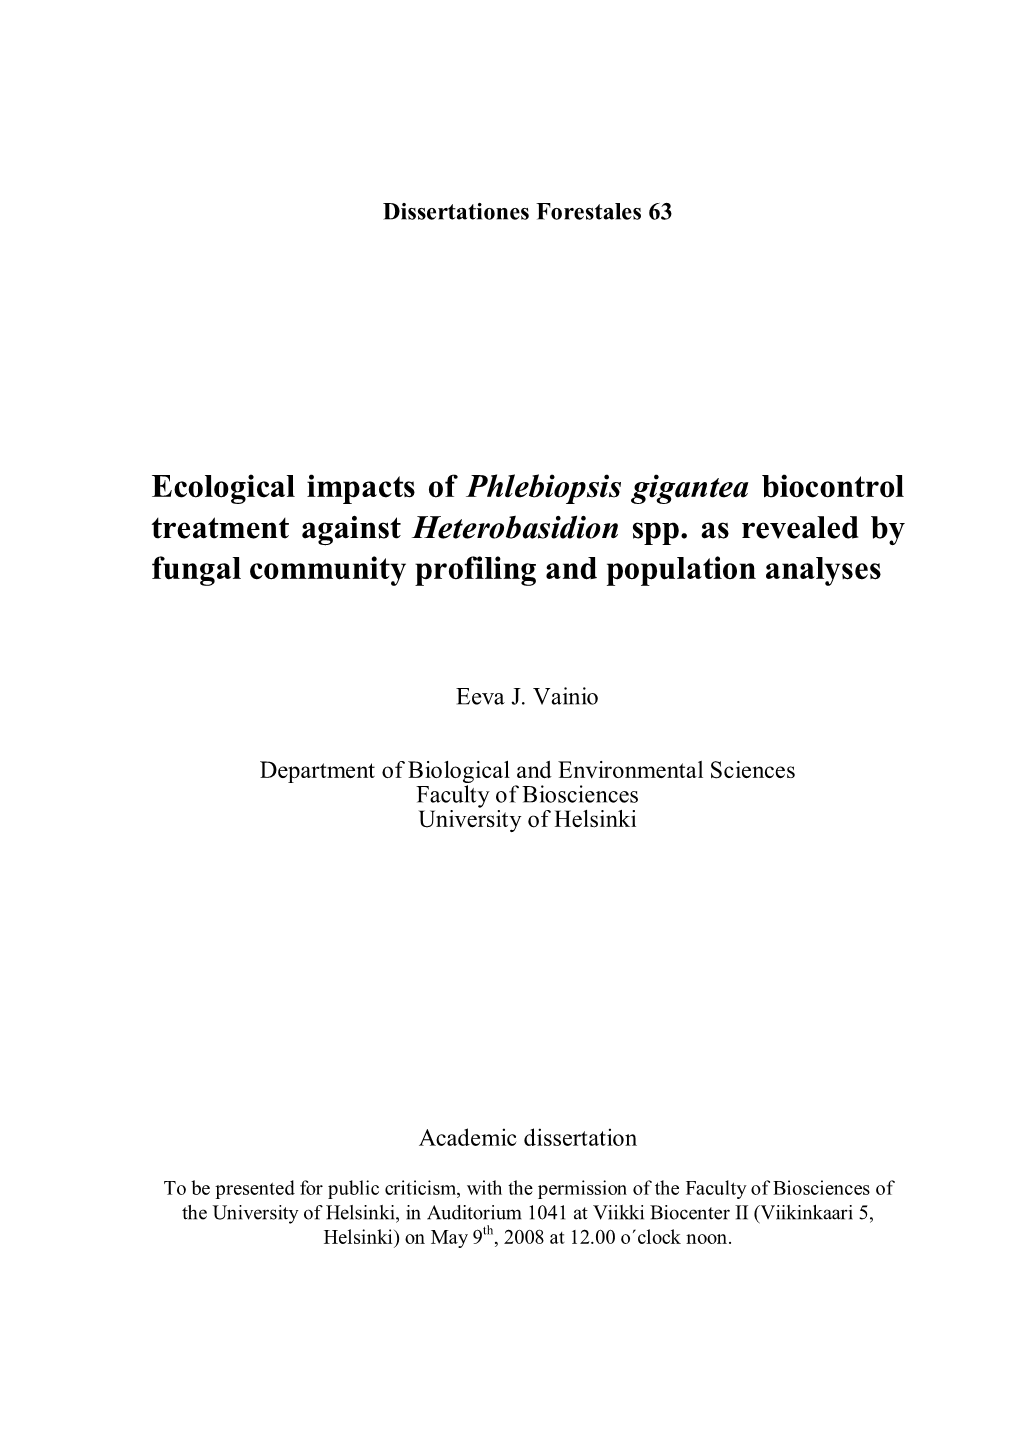 Ecological Impacts of Phlebiopsis Gigantea Biocontrol Treatment Against Heterobasidion Spp